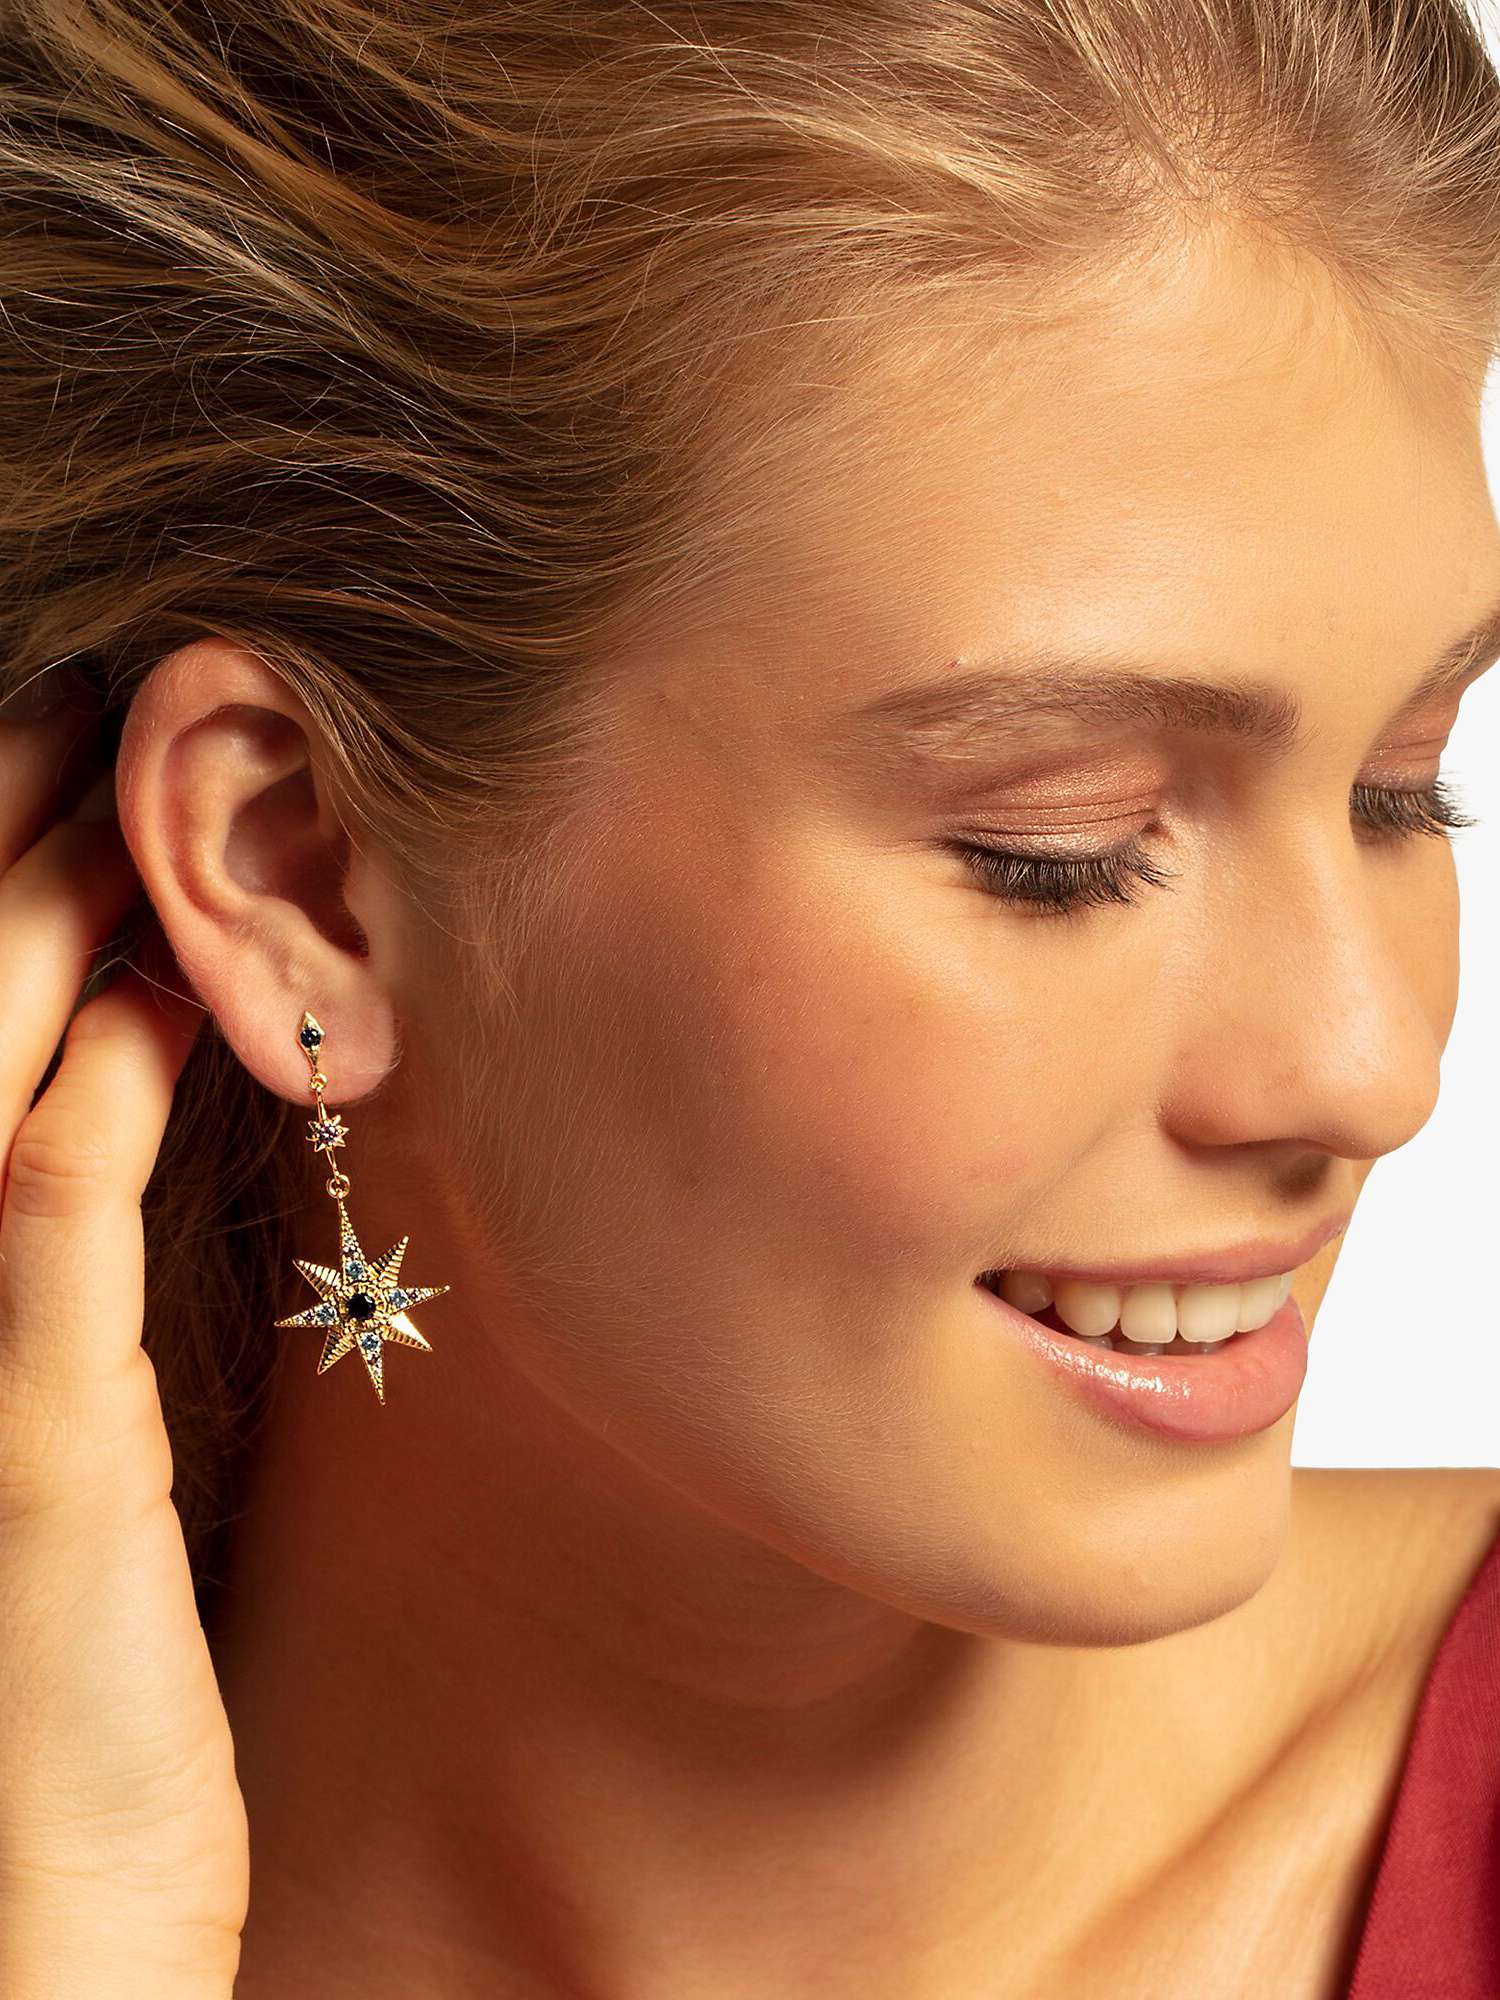 Buy THOMAS SABO Magical Star & Moon Cubic Zirconia Drop Earrings, Gold/Multi Online at johnlewis.com